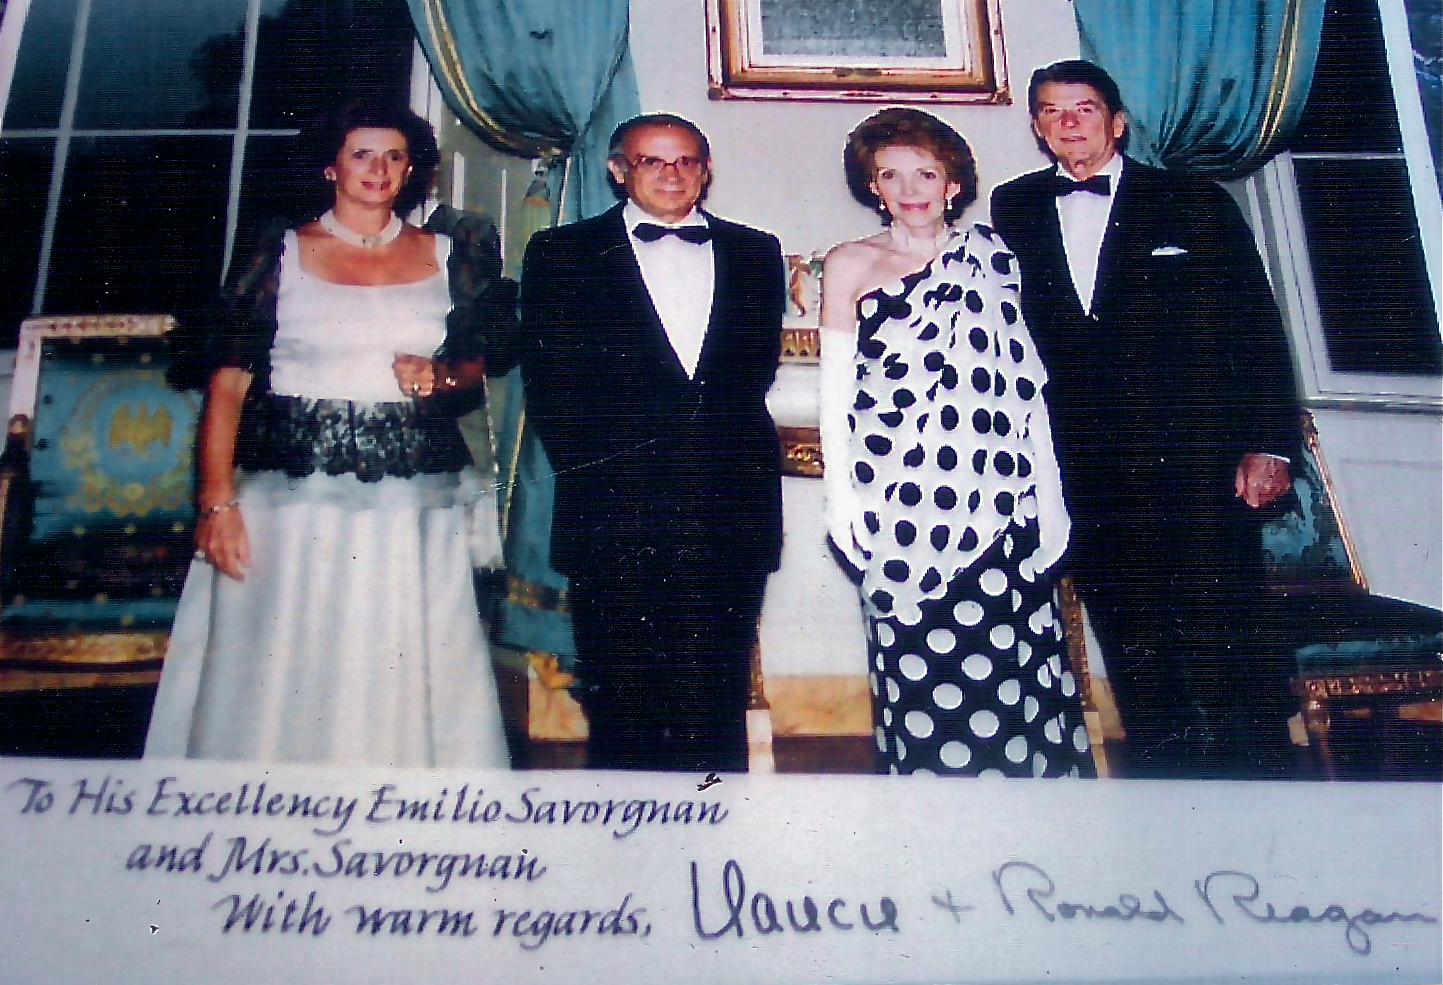 Emilio Savorgnan & President Reagan